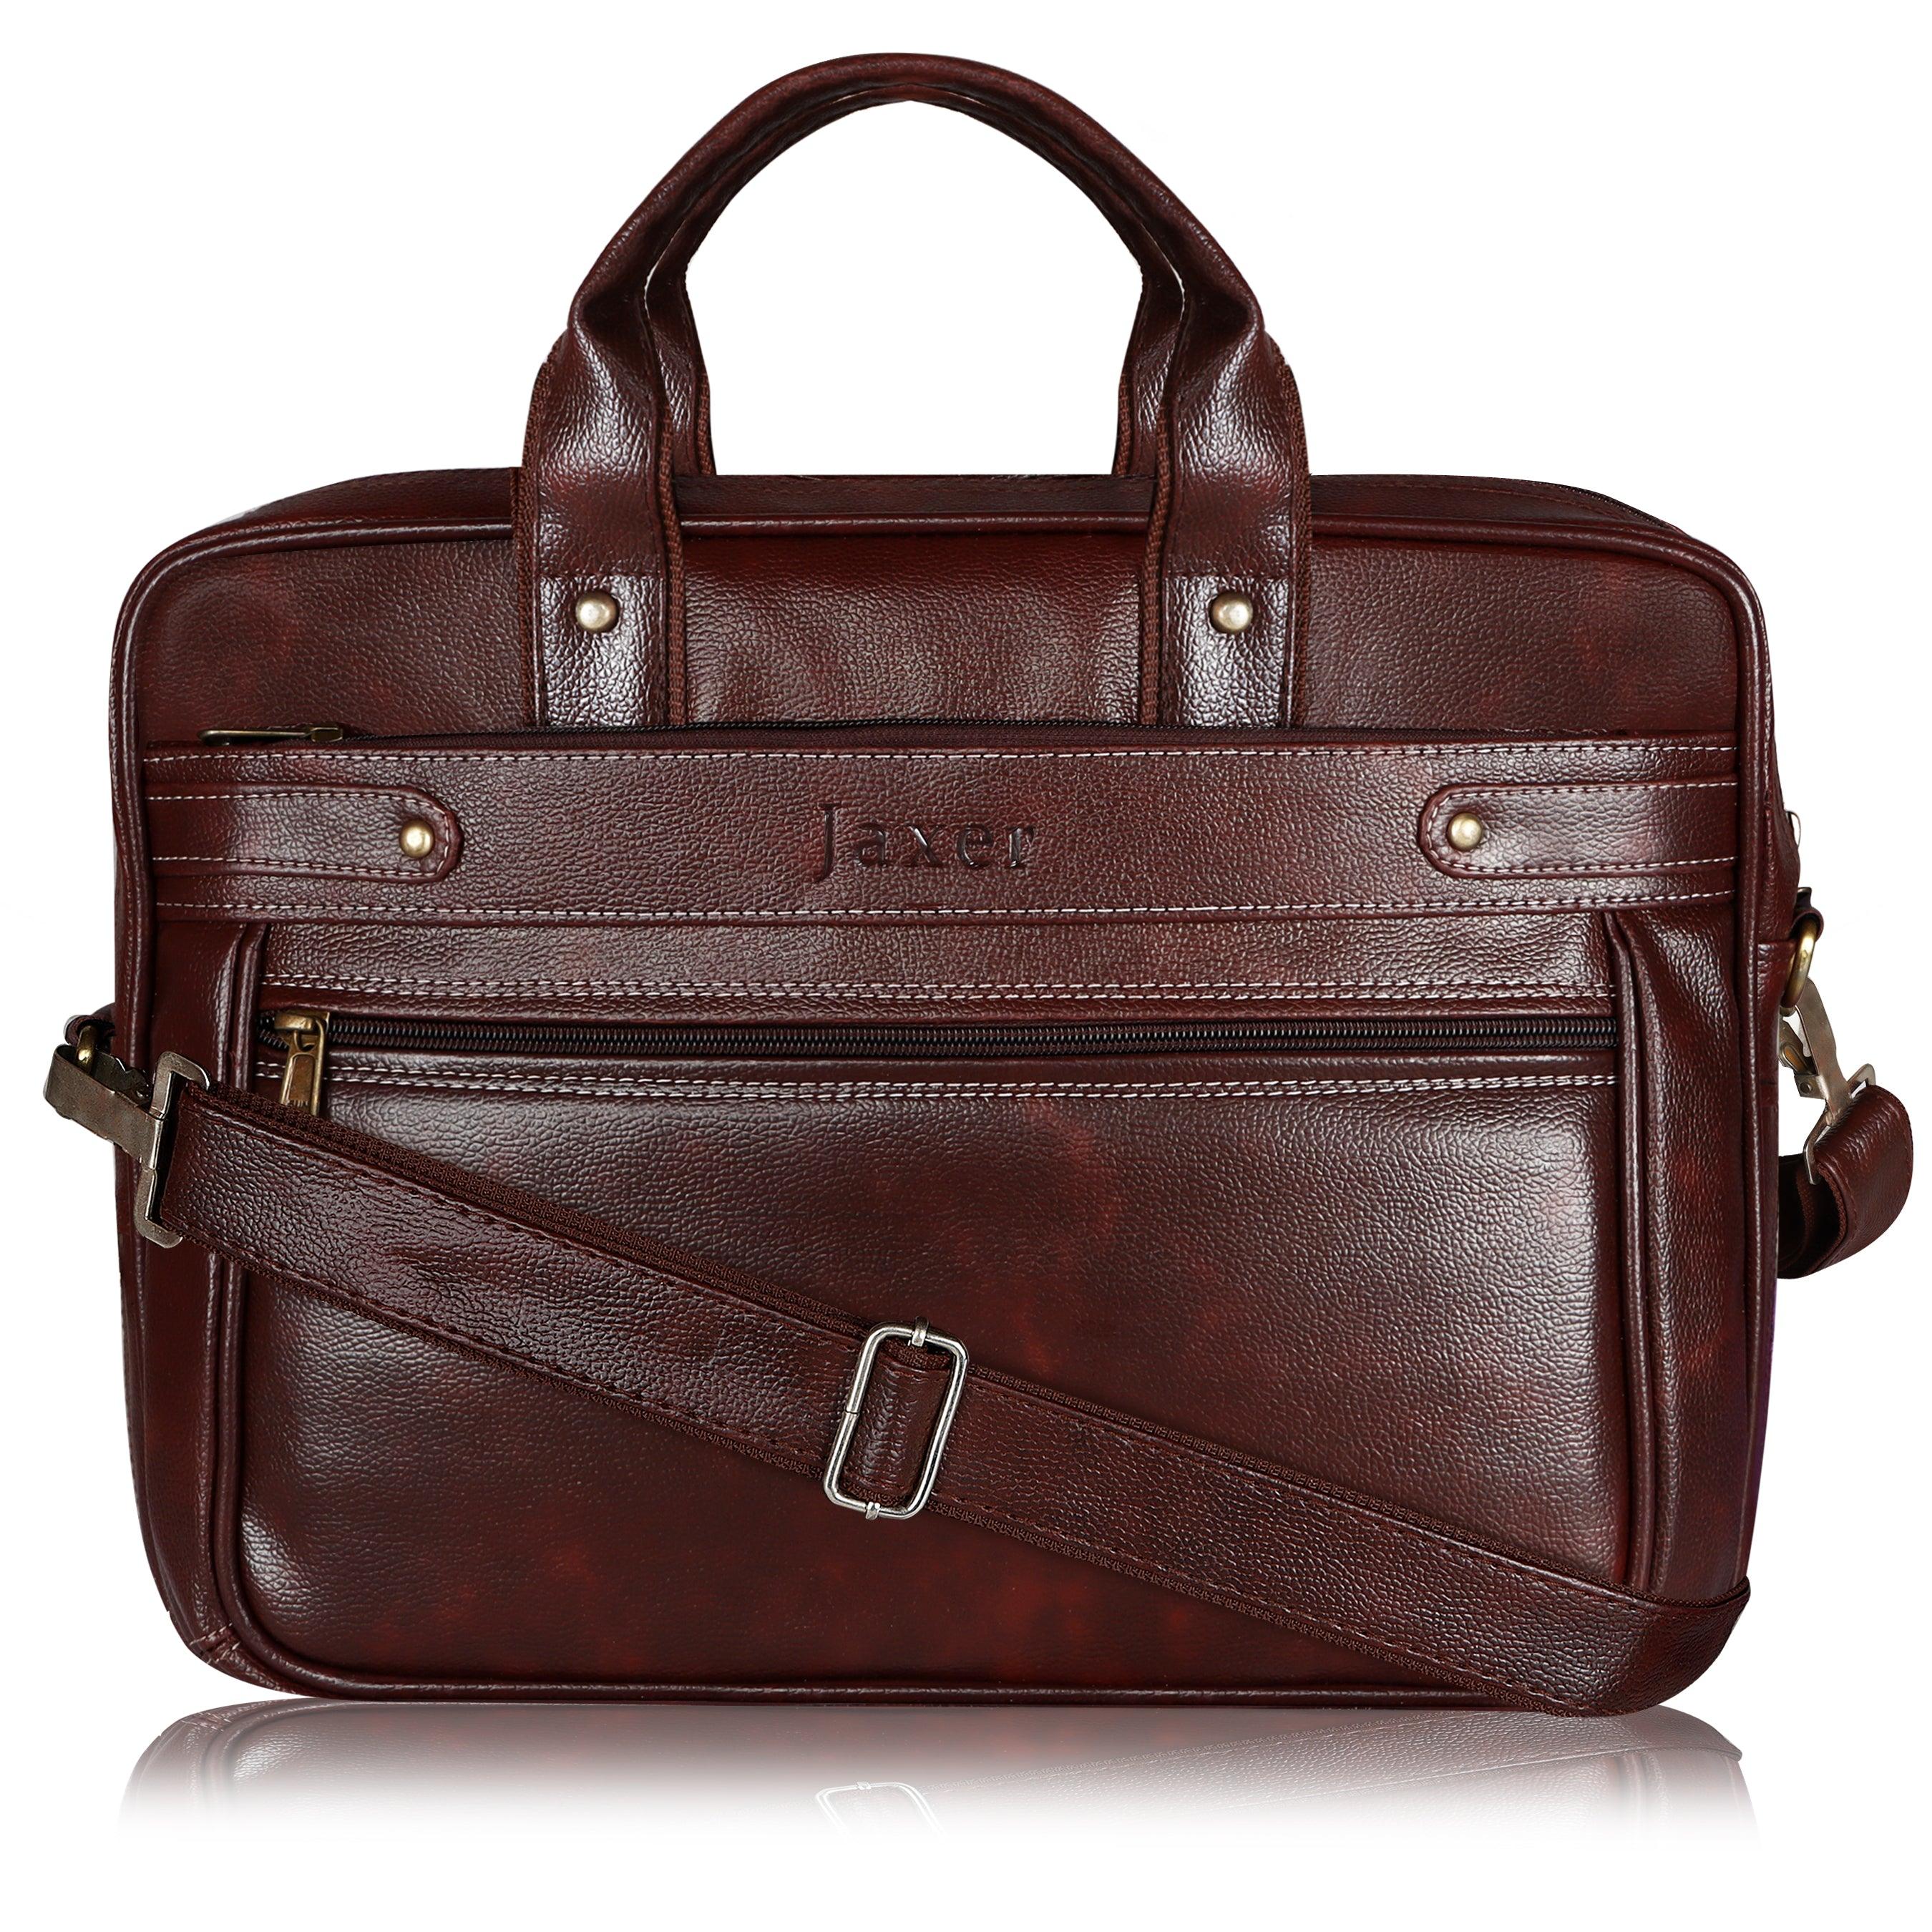 Jaxer Brown Leather Laptop Messenger Bag for Men - JXRMB012 - Jainx Store